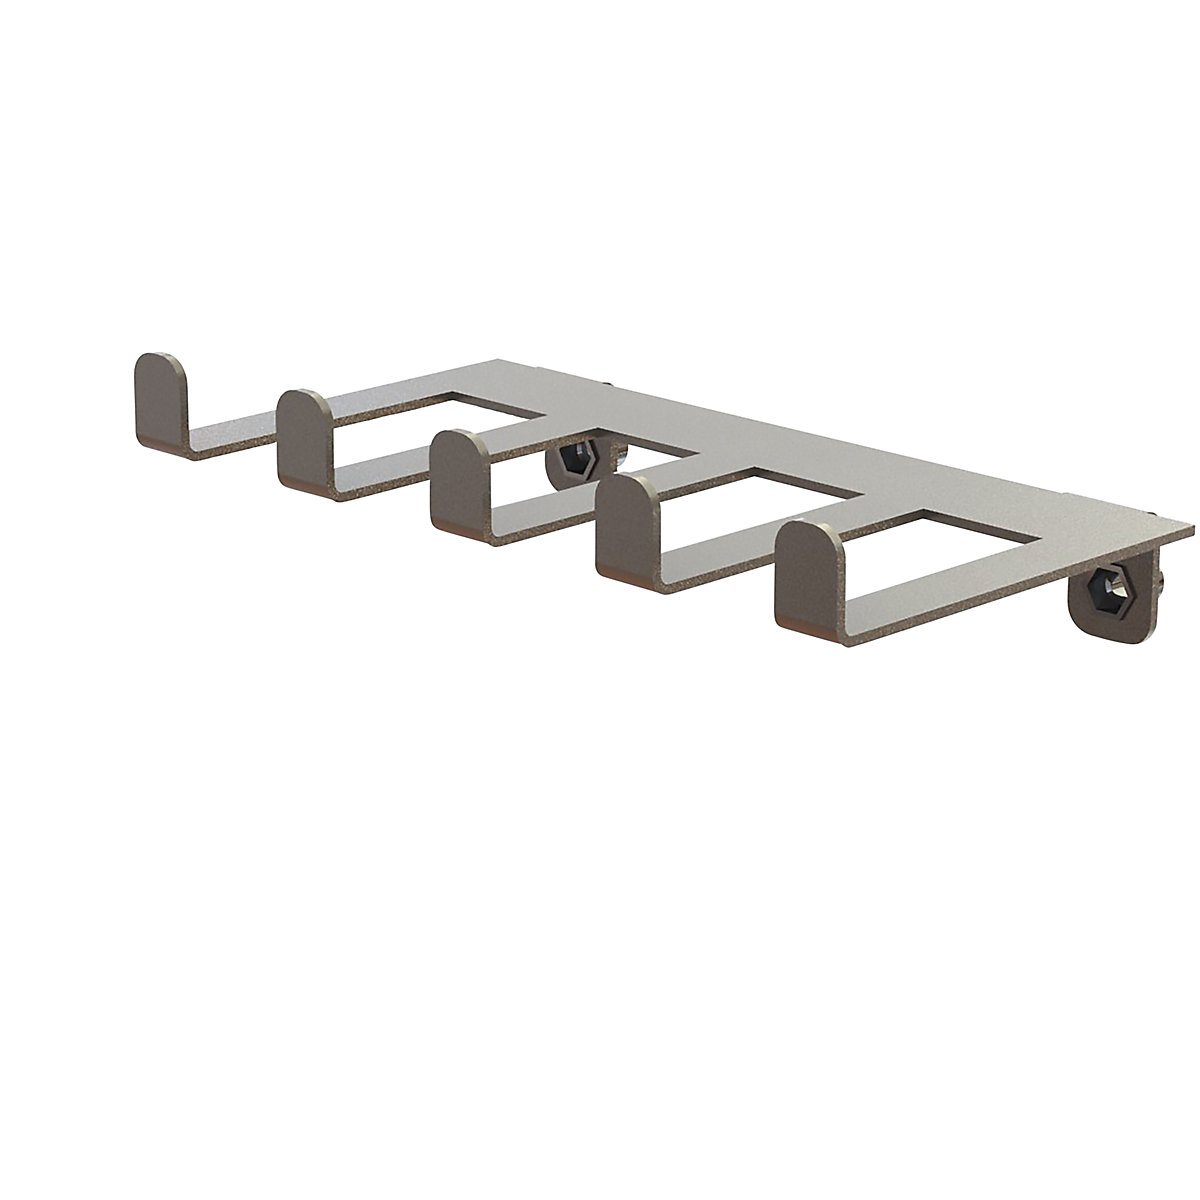 Stainless steel tool holder strip